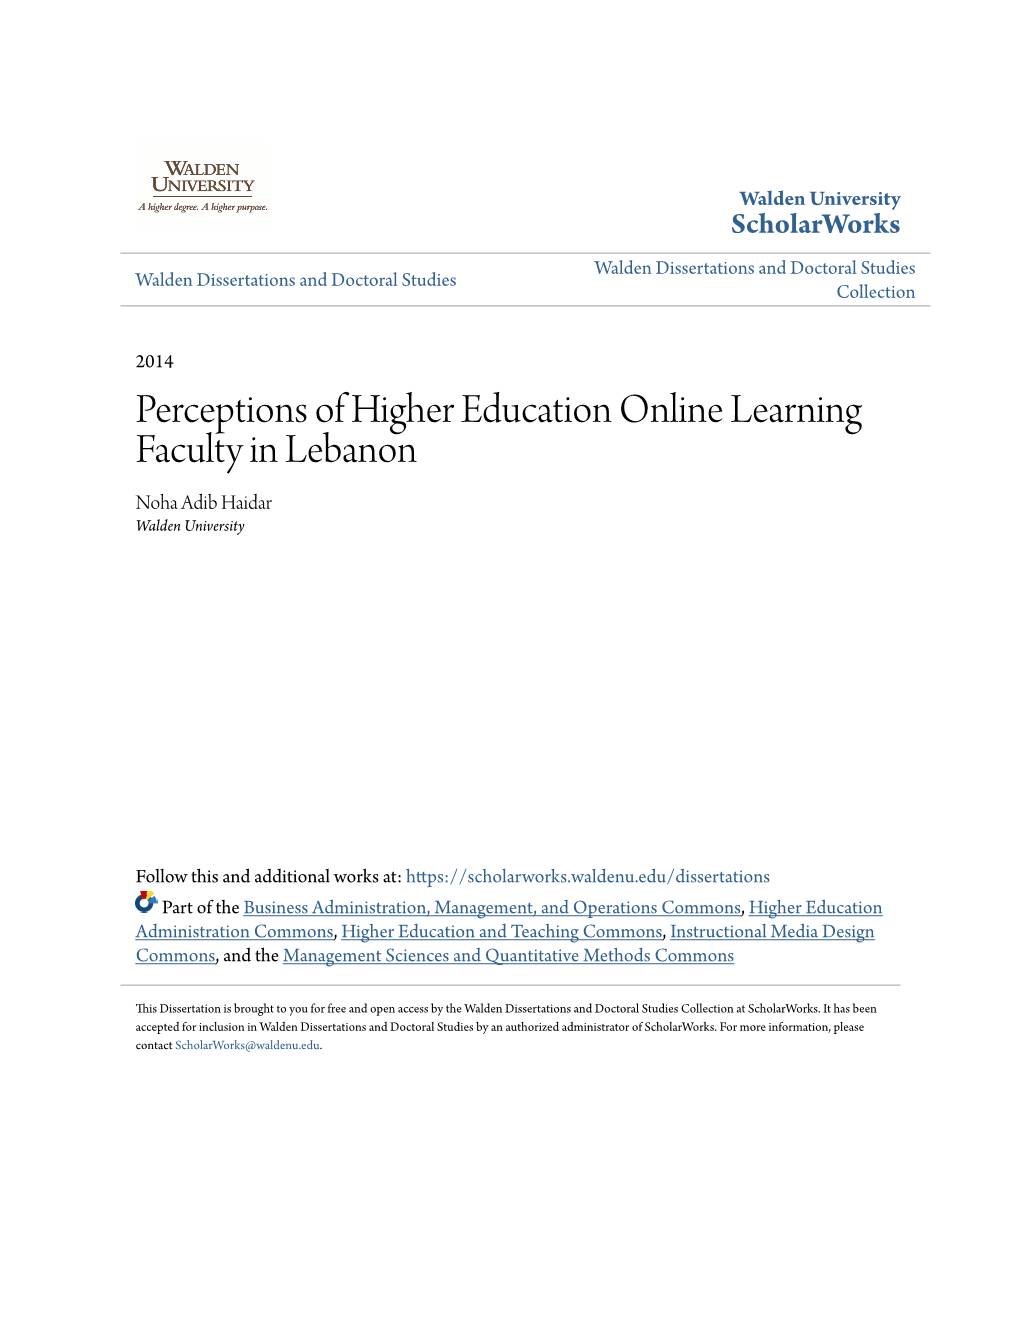 Perceptions of Higher Education Online Learning Faculty in Lebanon Noha Adib Haidar Walden University